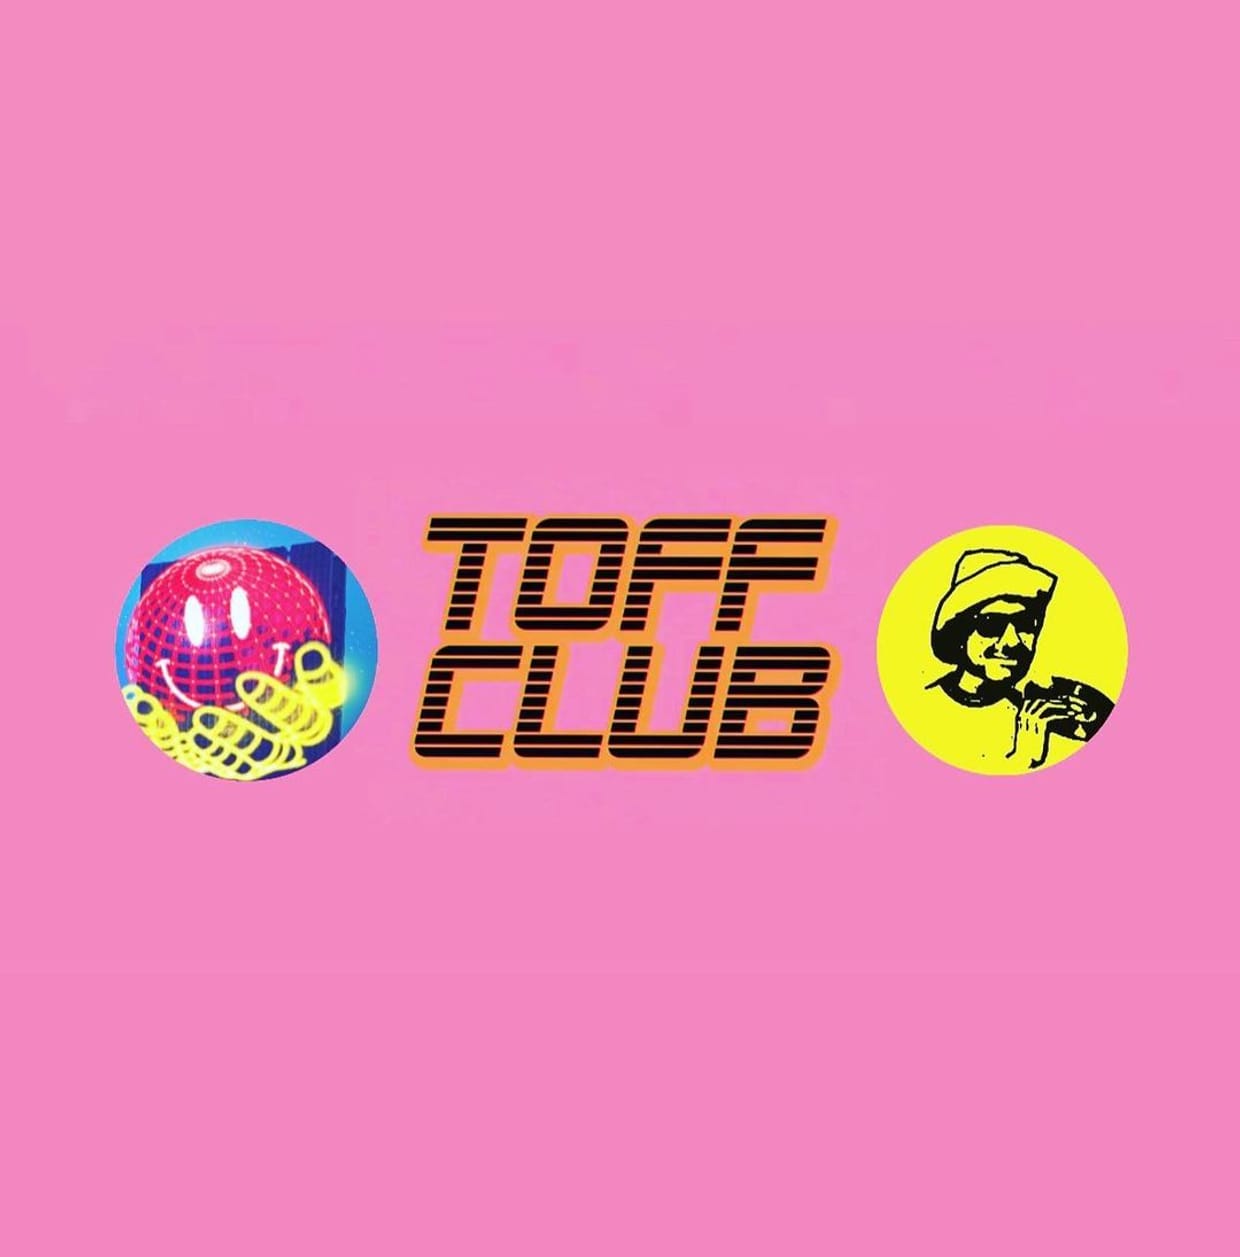 TOFF CLUB WITH DJ POST PERCY